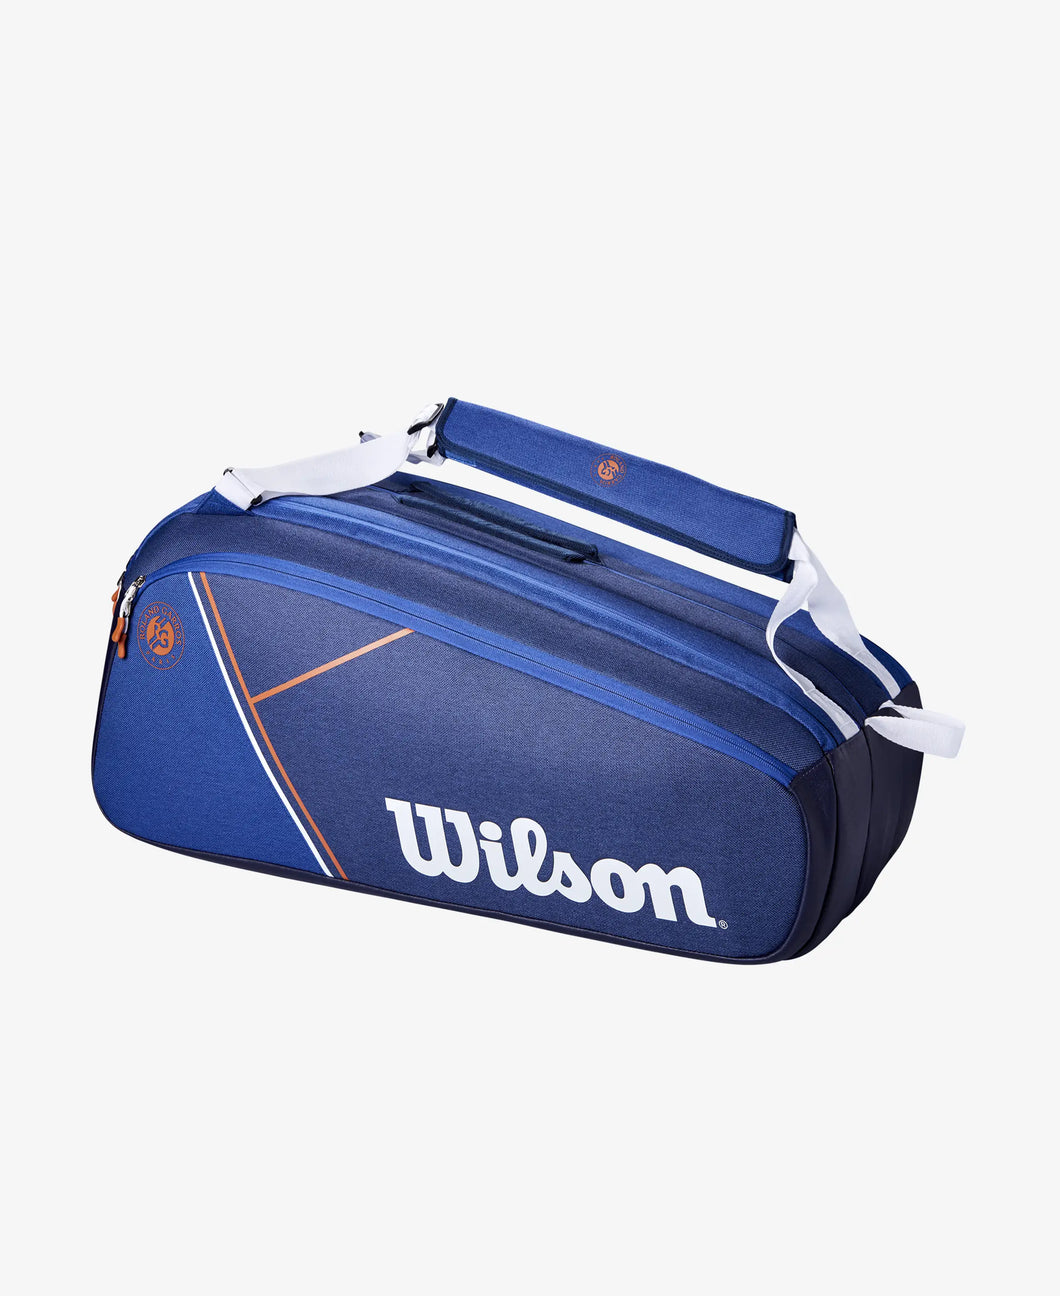 Wilson Roland Garros Super Tour 9 Pack bag - NEW ARRIVAL